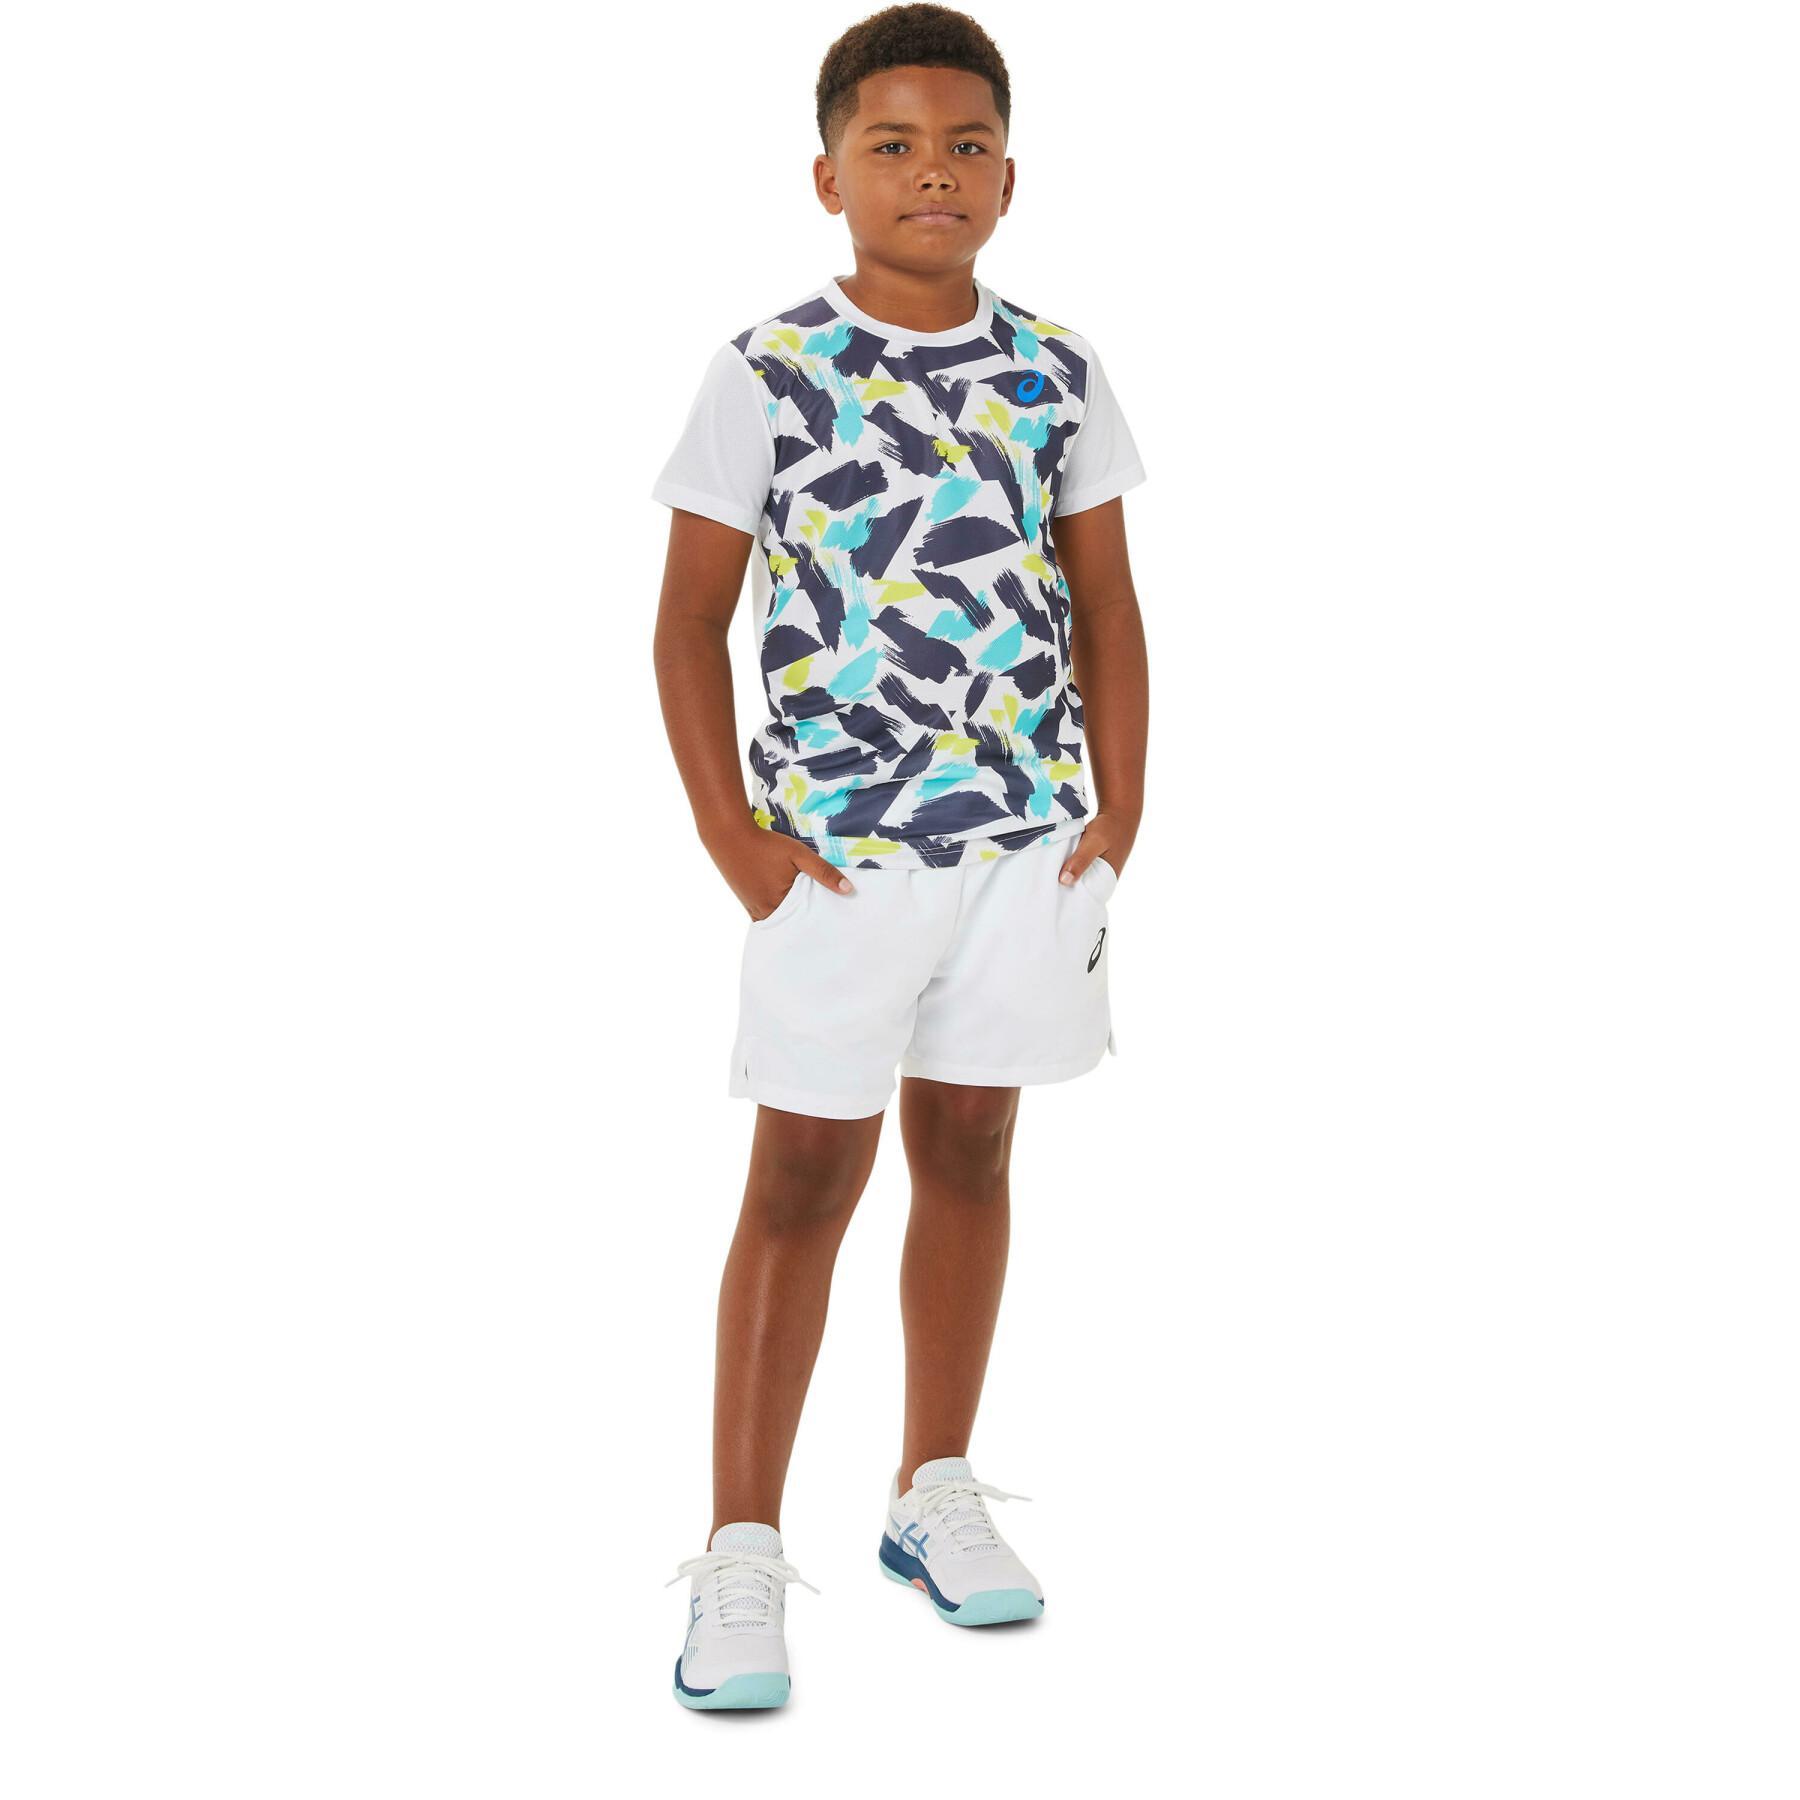 Kinder shorts Asics Boys Tennis